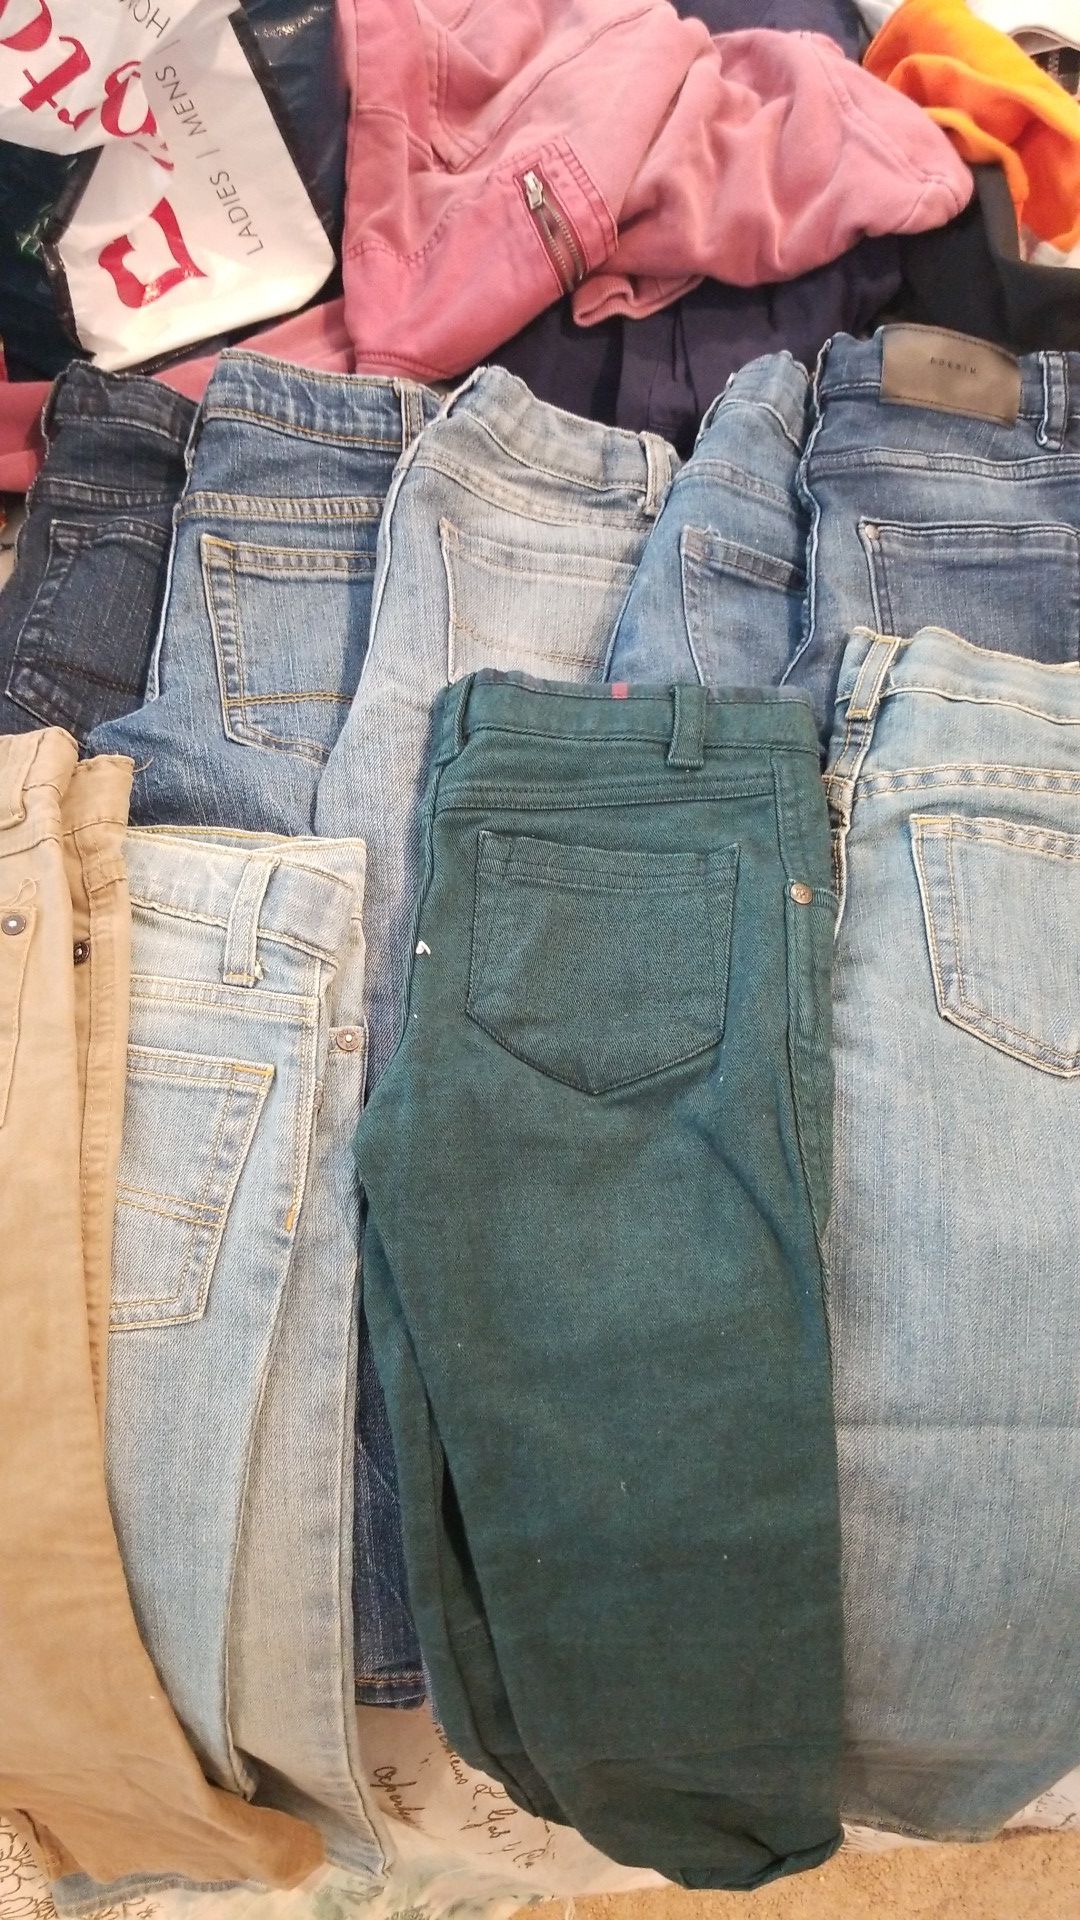 Boys size 5 jeans